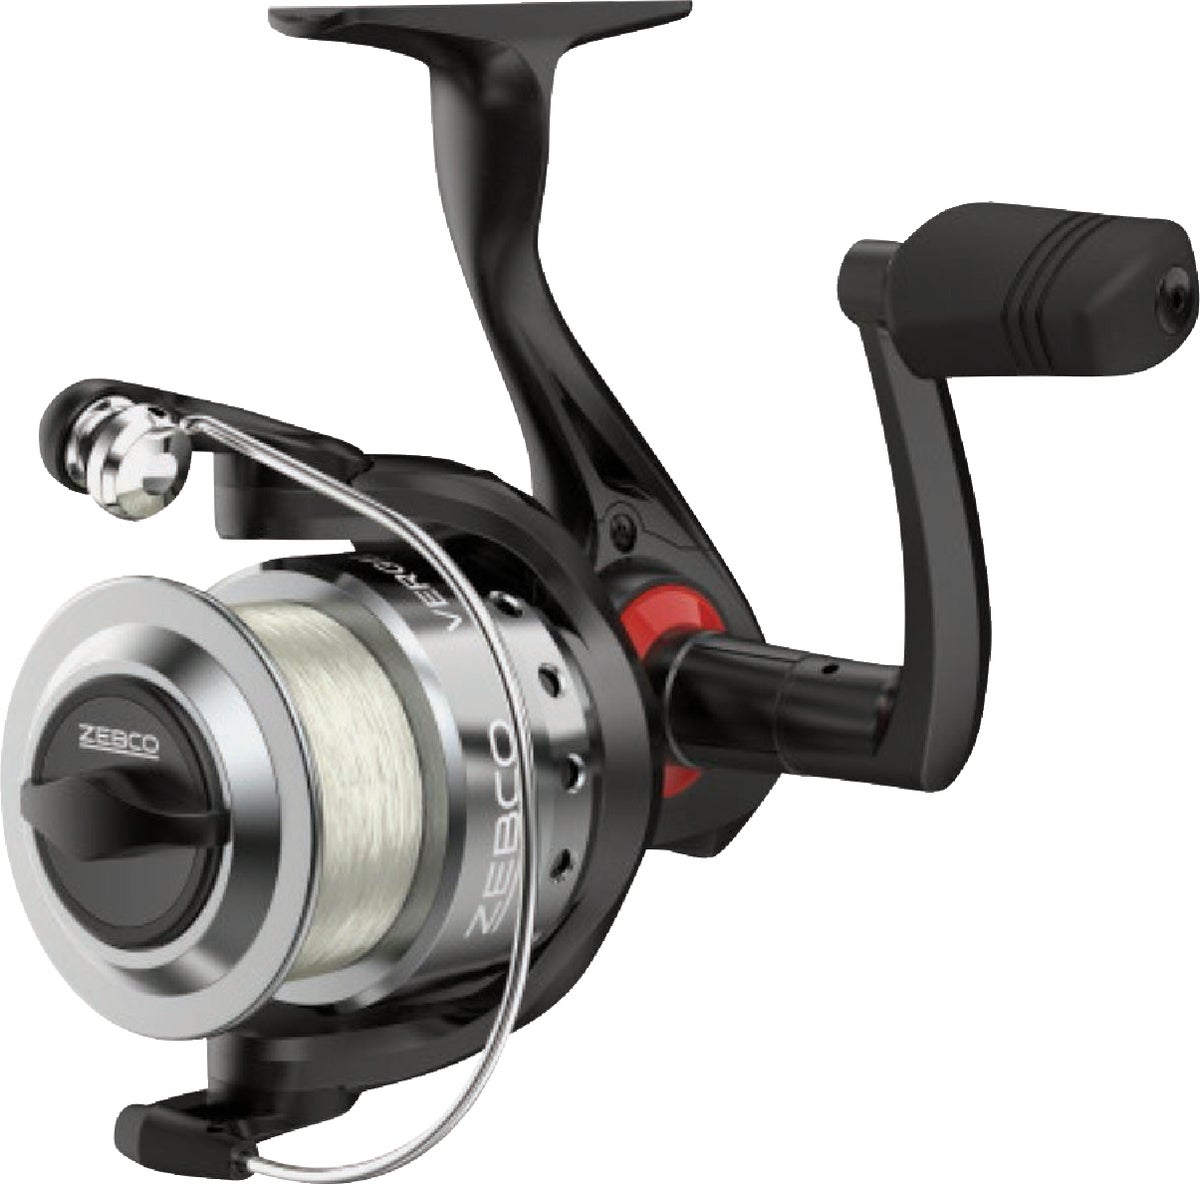 Buy Zebco 33 Platinum Spincast Fishing Reel